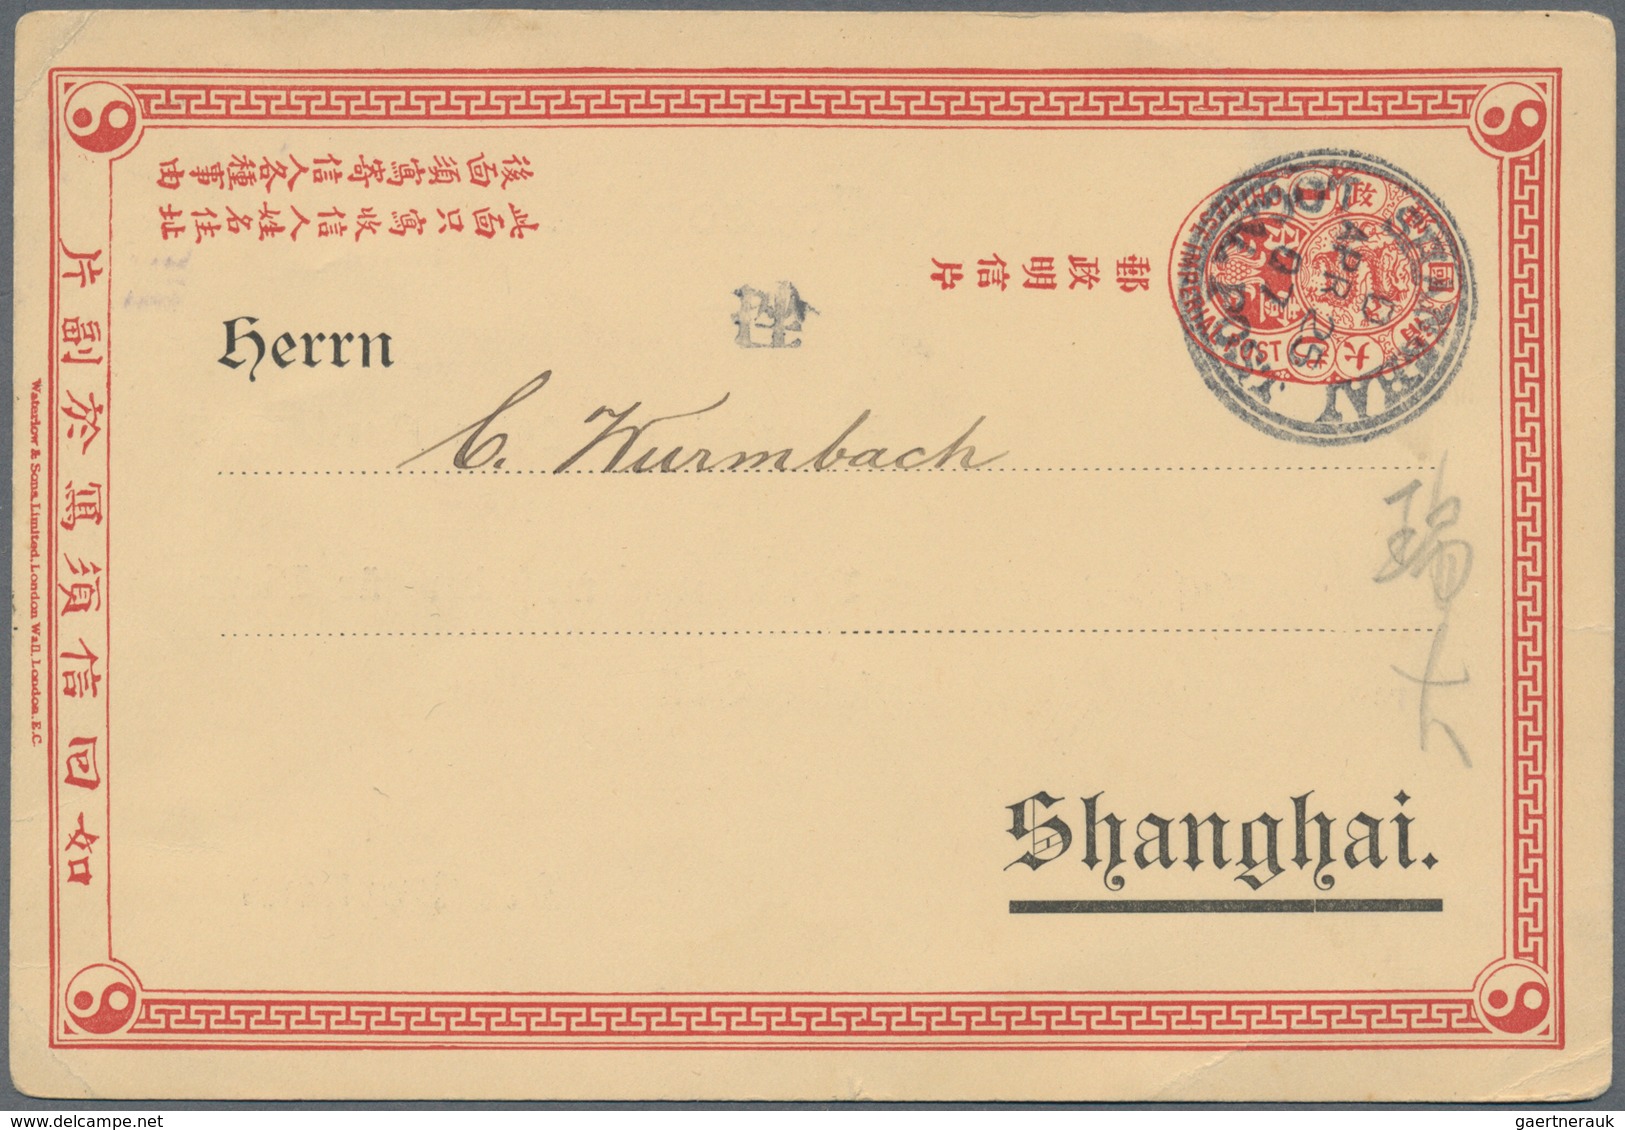 08203 China - Ganzsachen: 1898, Card CIP 1 C., Reply Part, Canc. "SHANGHAI LOCAL POST D APR 25 07" Used Lo - Ansichtskarten